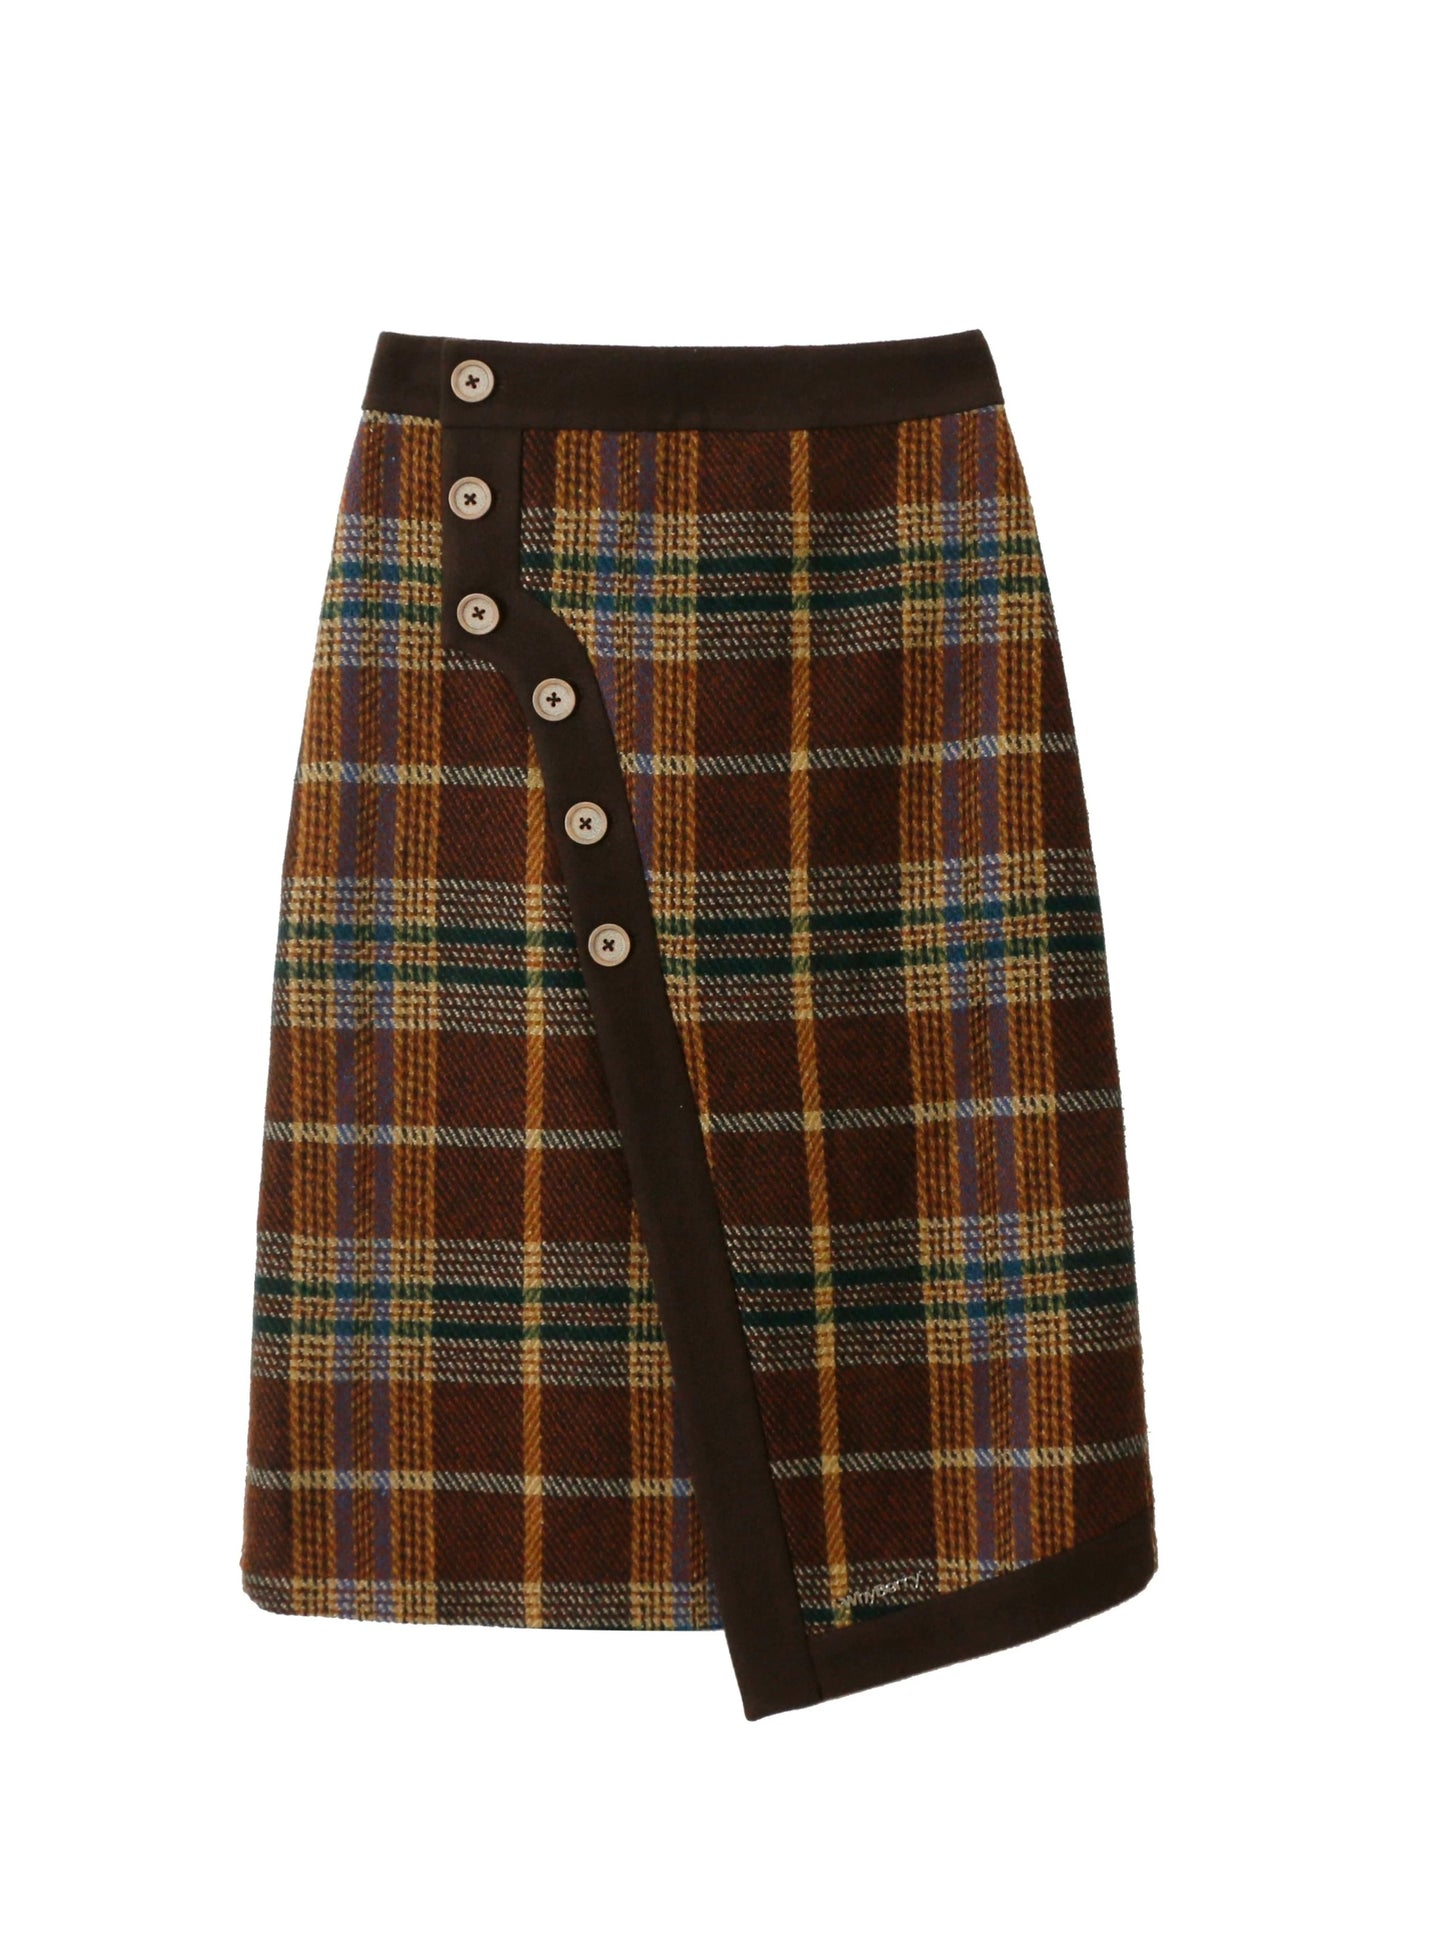 Brown Plaid Skirt